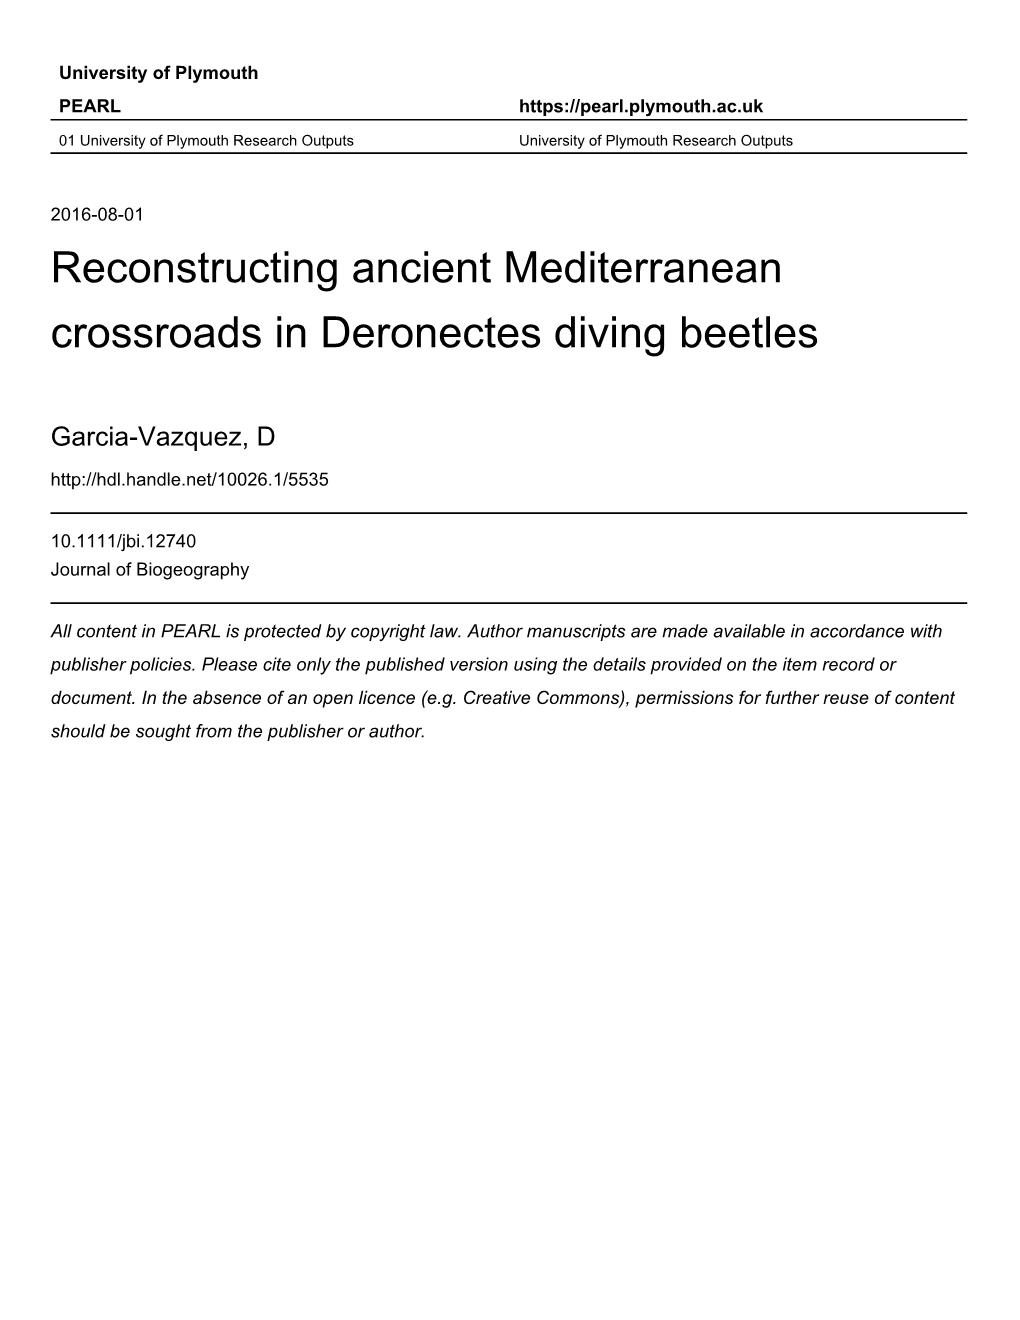 Reconstructing Ancient Mediterranean Crossroads in Deronectes Diving Beetles